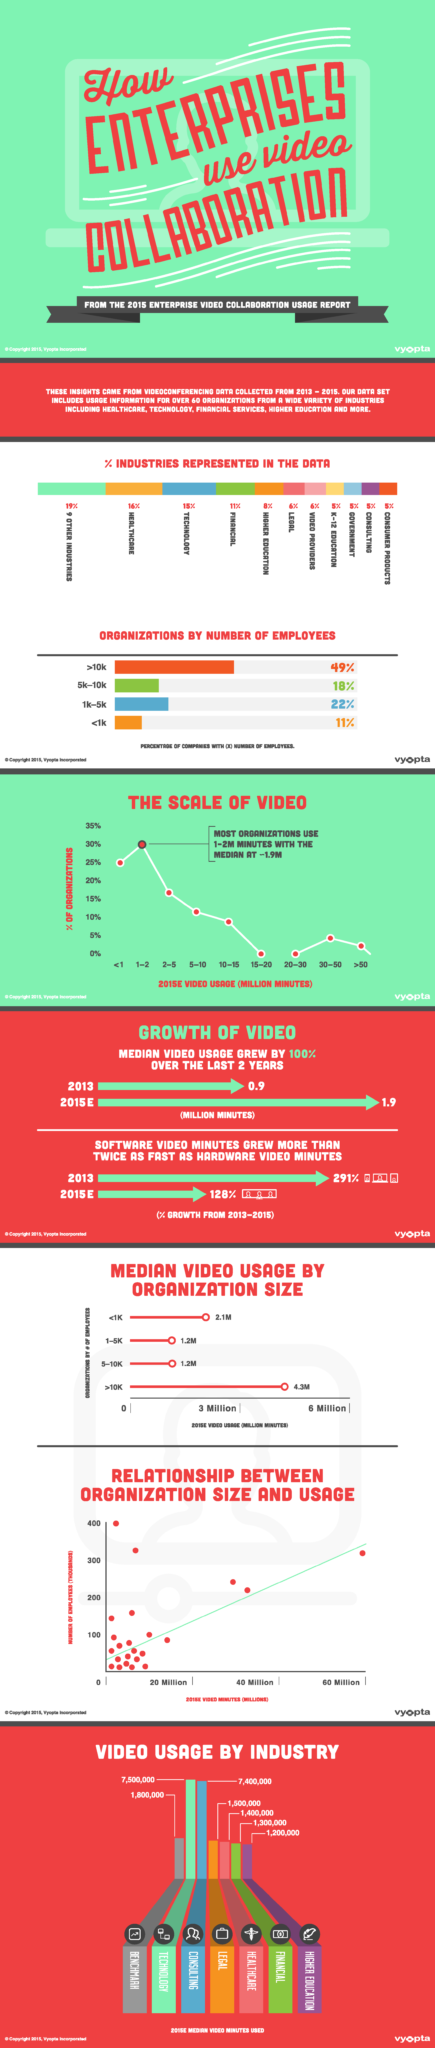 Infographic: Enterprise Video Conferencing Usage 